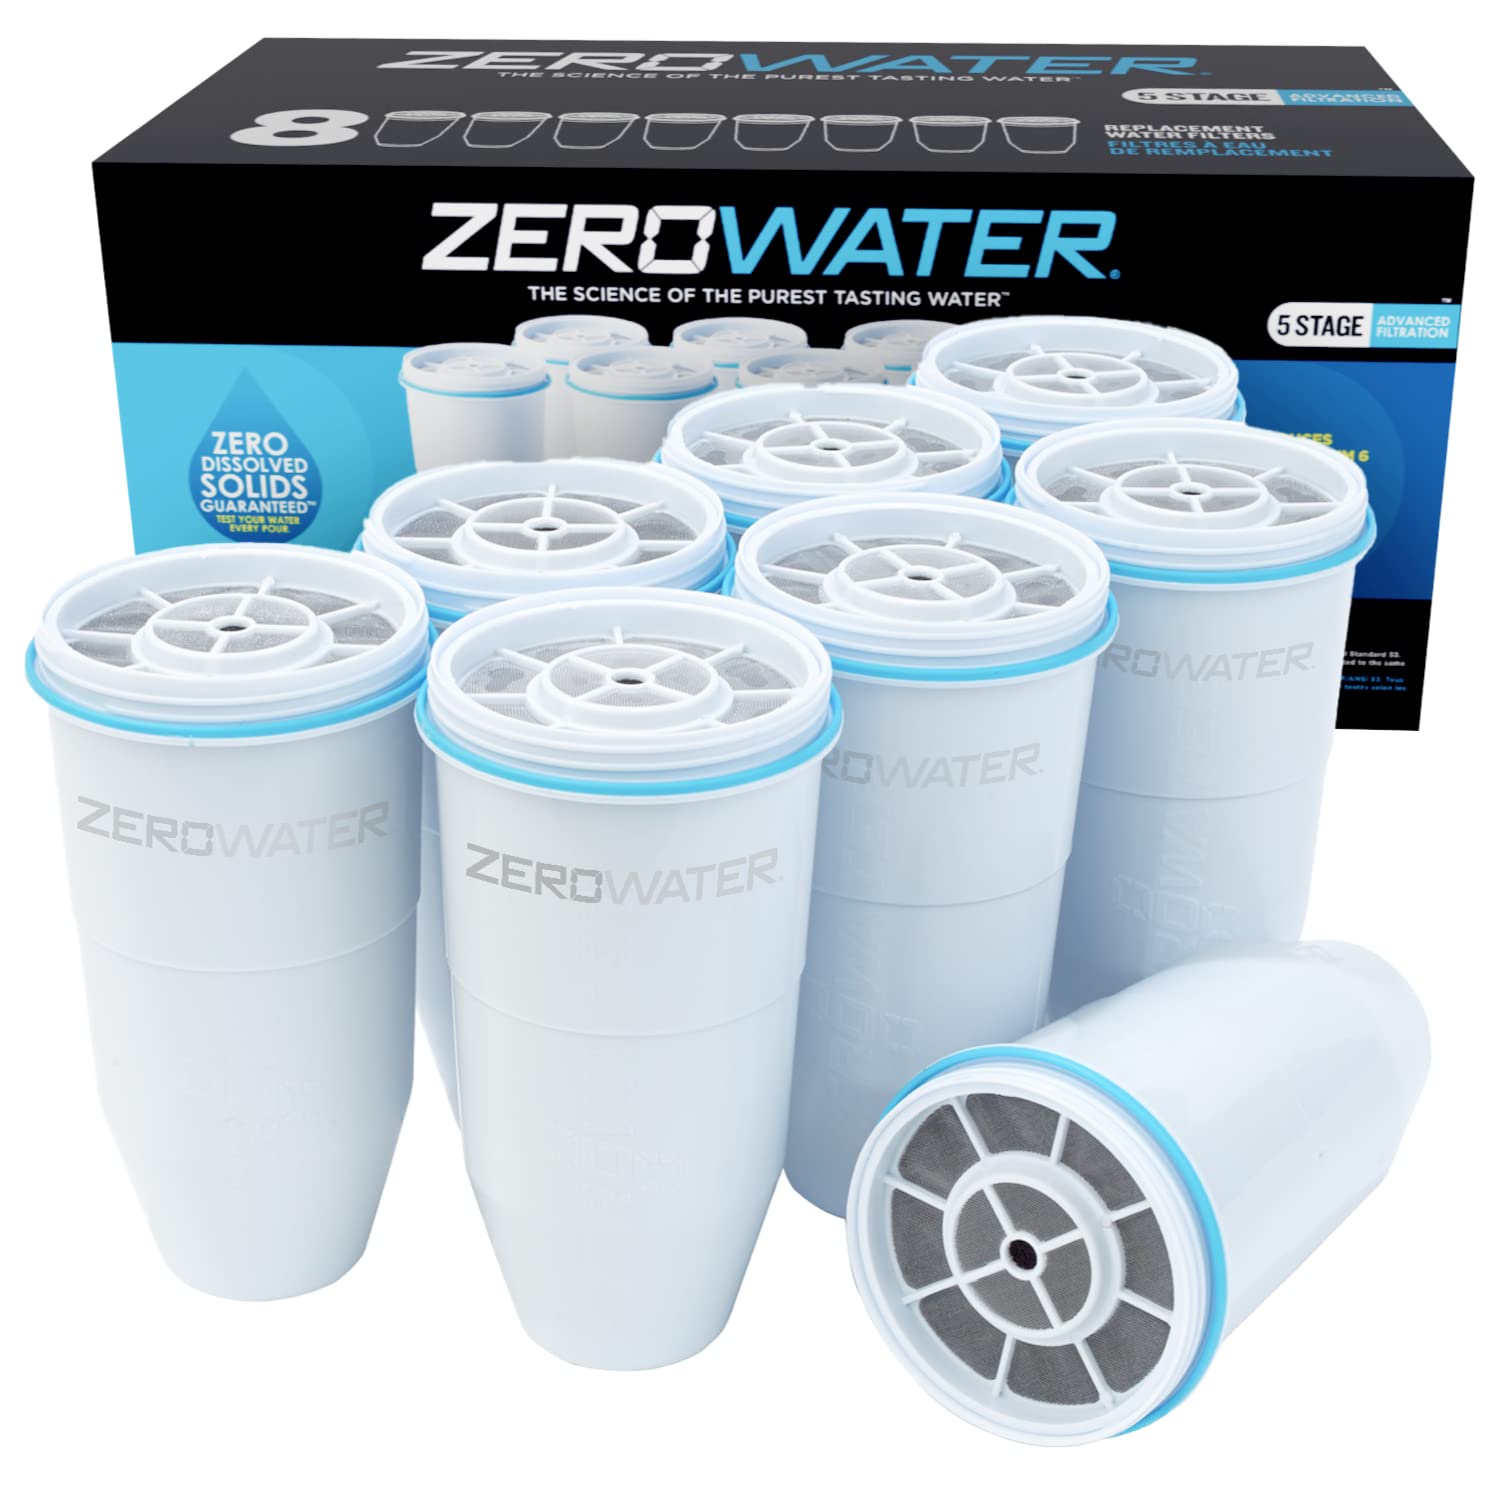 ZeroWater 公式交換フィルター - 水道水の味を改善する5段階フィルター交換0 TDS - 鉛、クロム、PFOA/PFOSを削減するNSF認定、8個パック